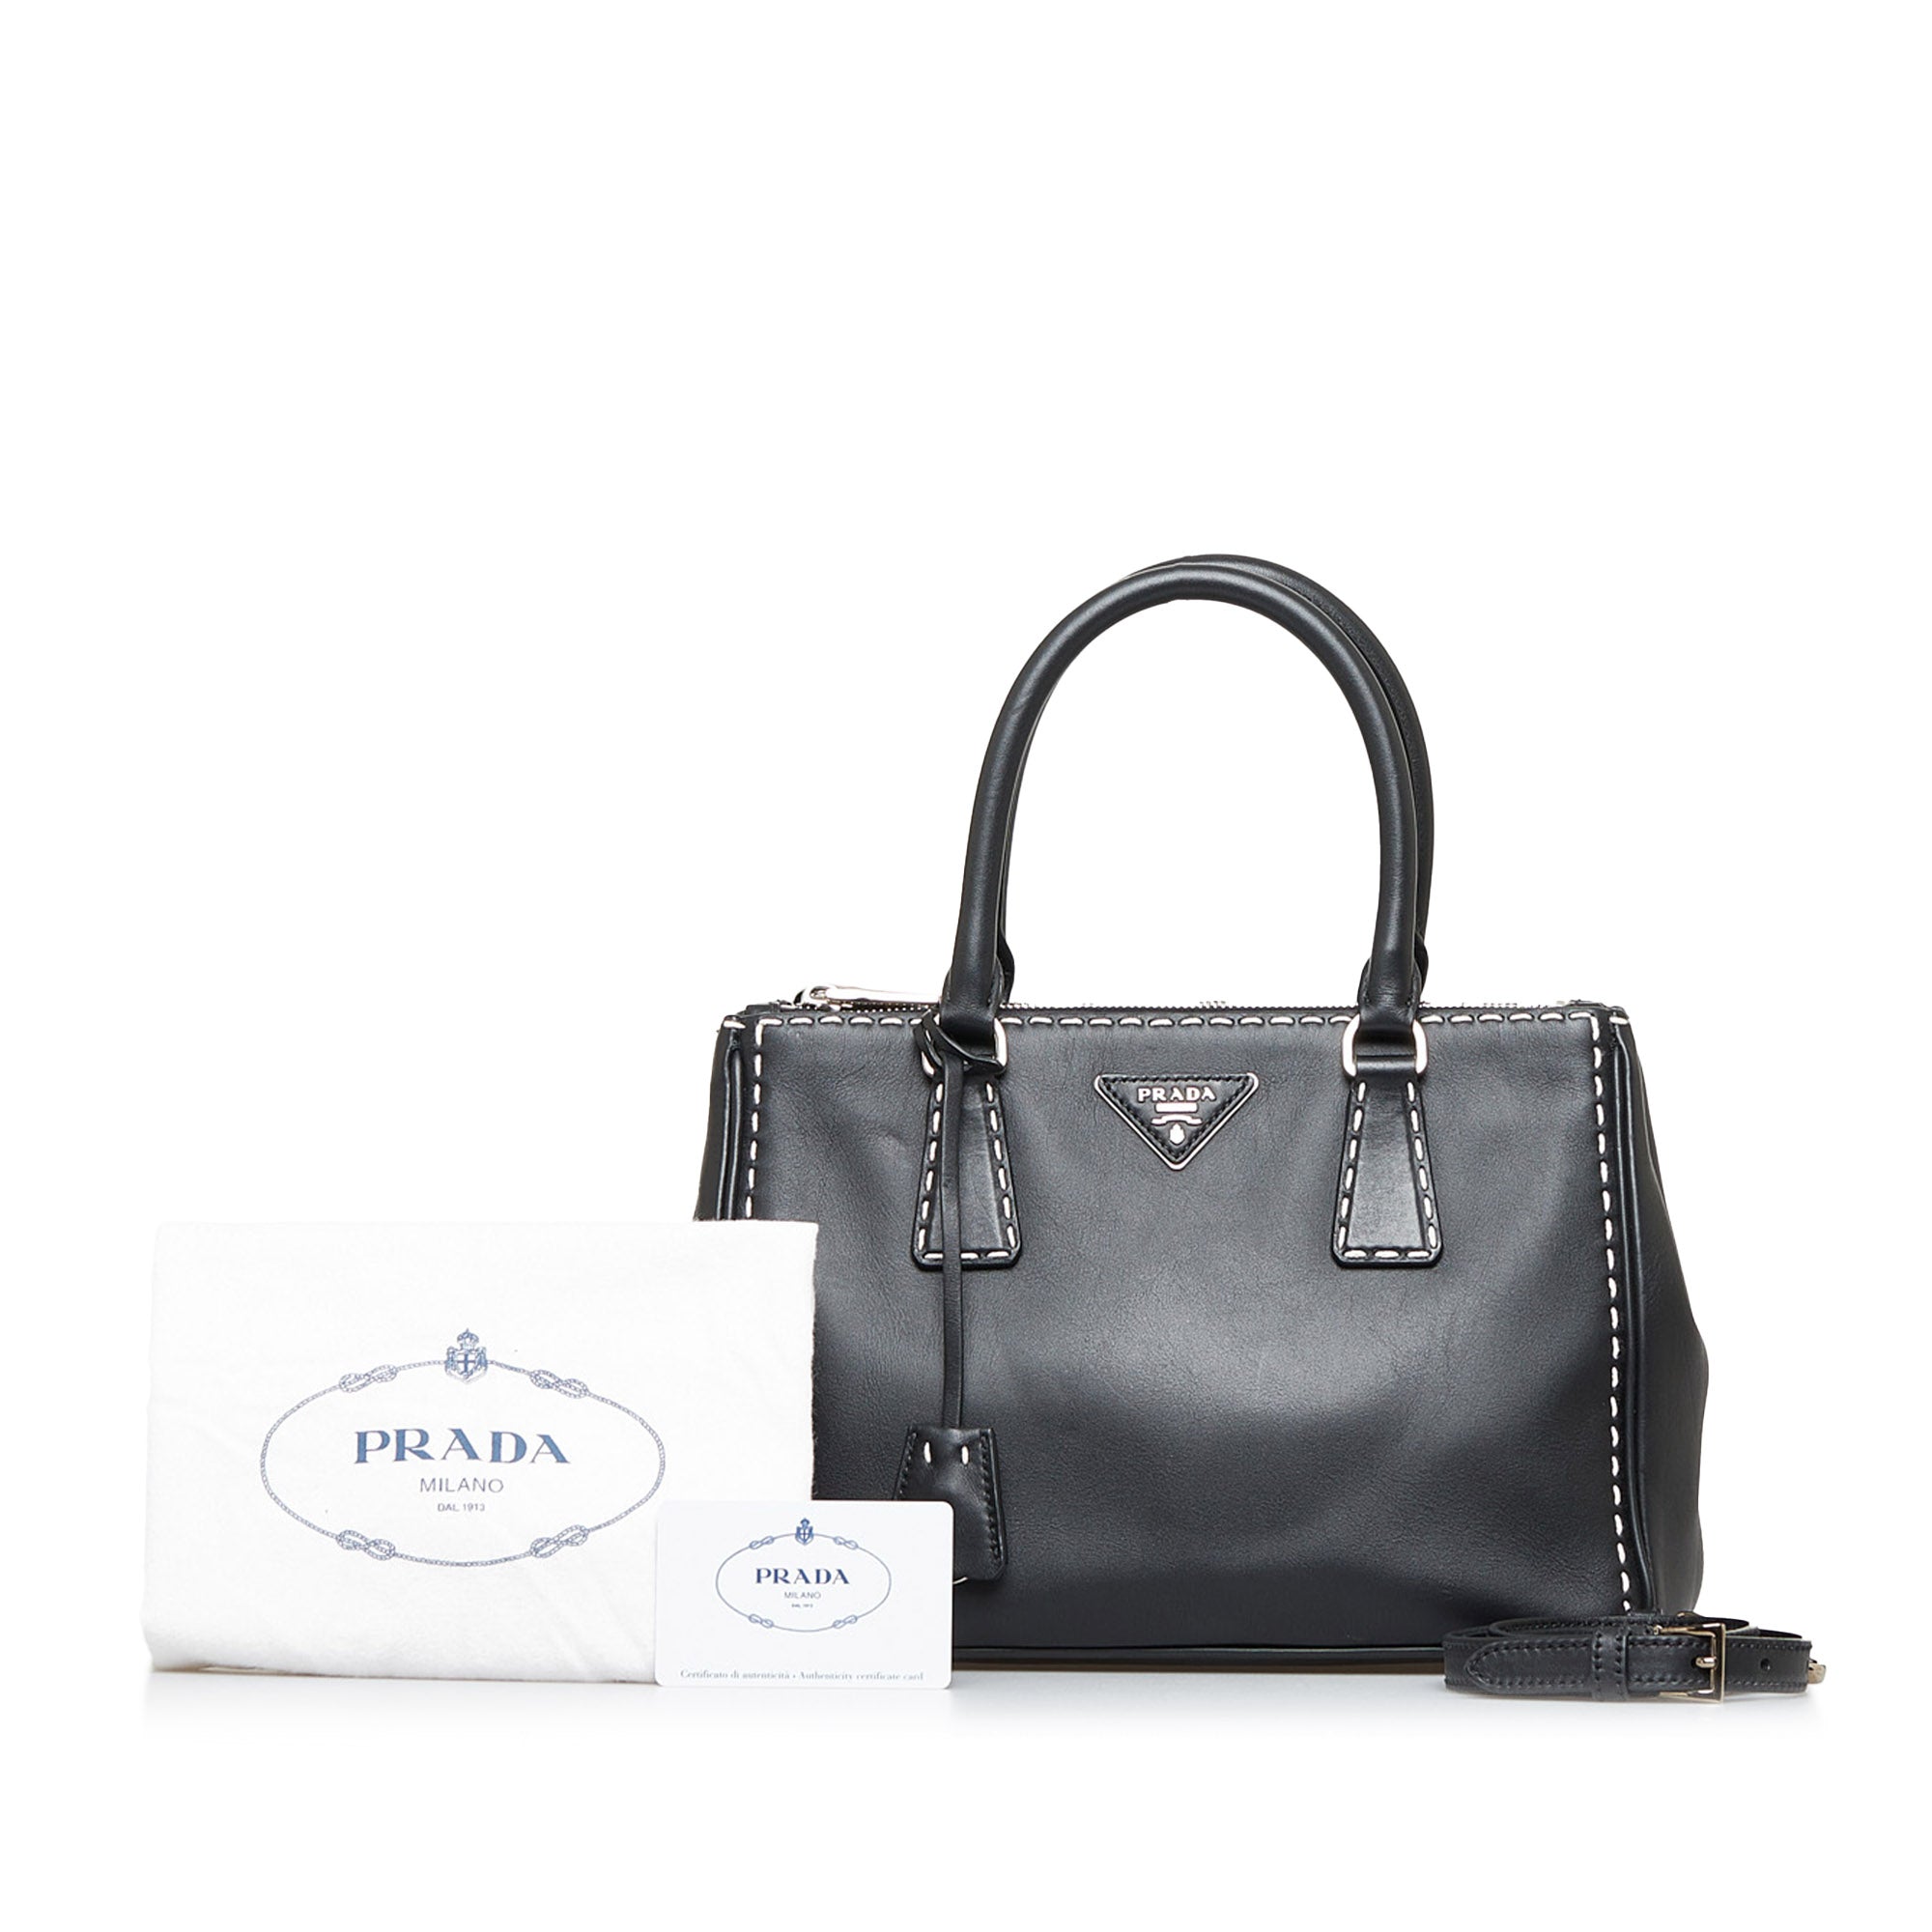 Galleria Small Leather Bag in Black - Prada